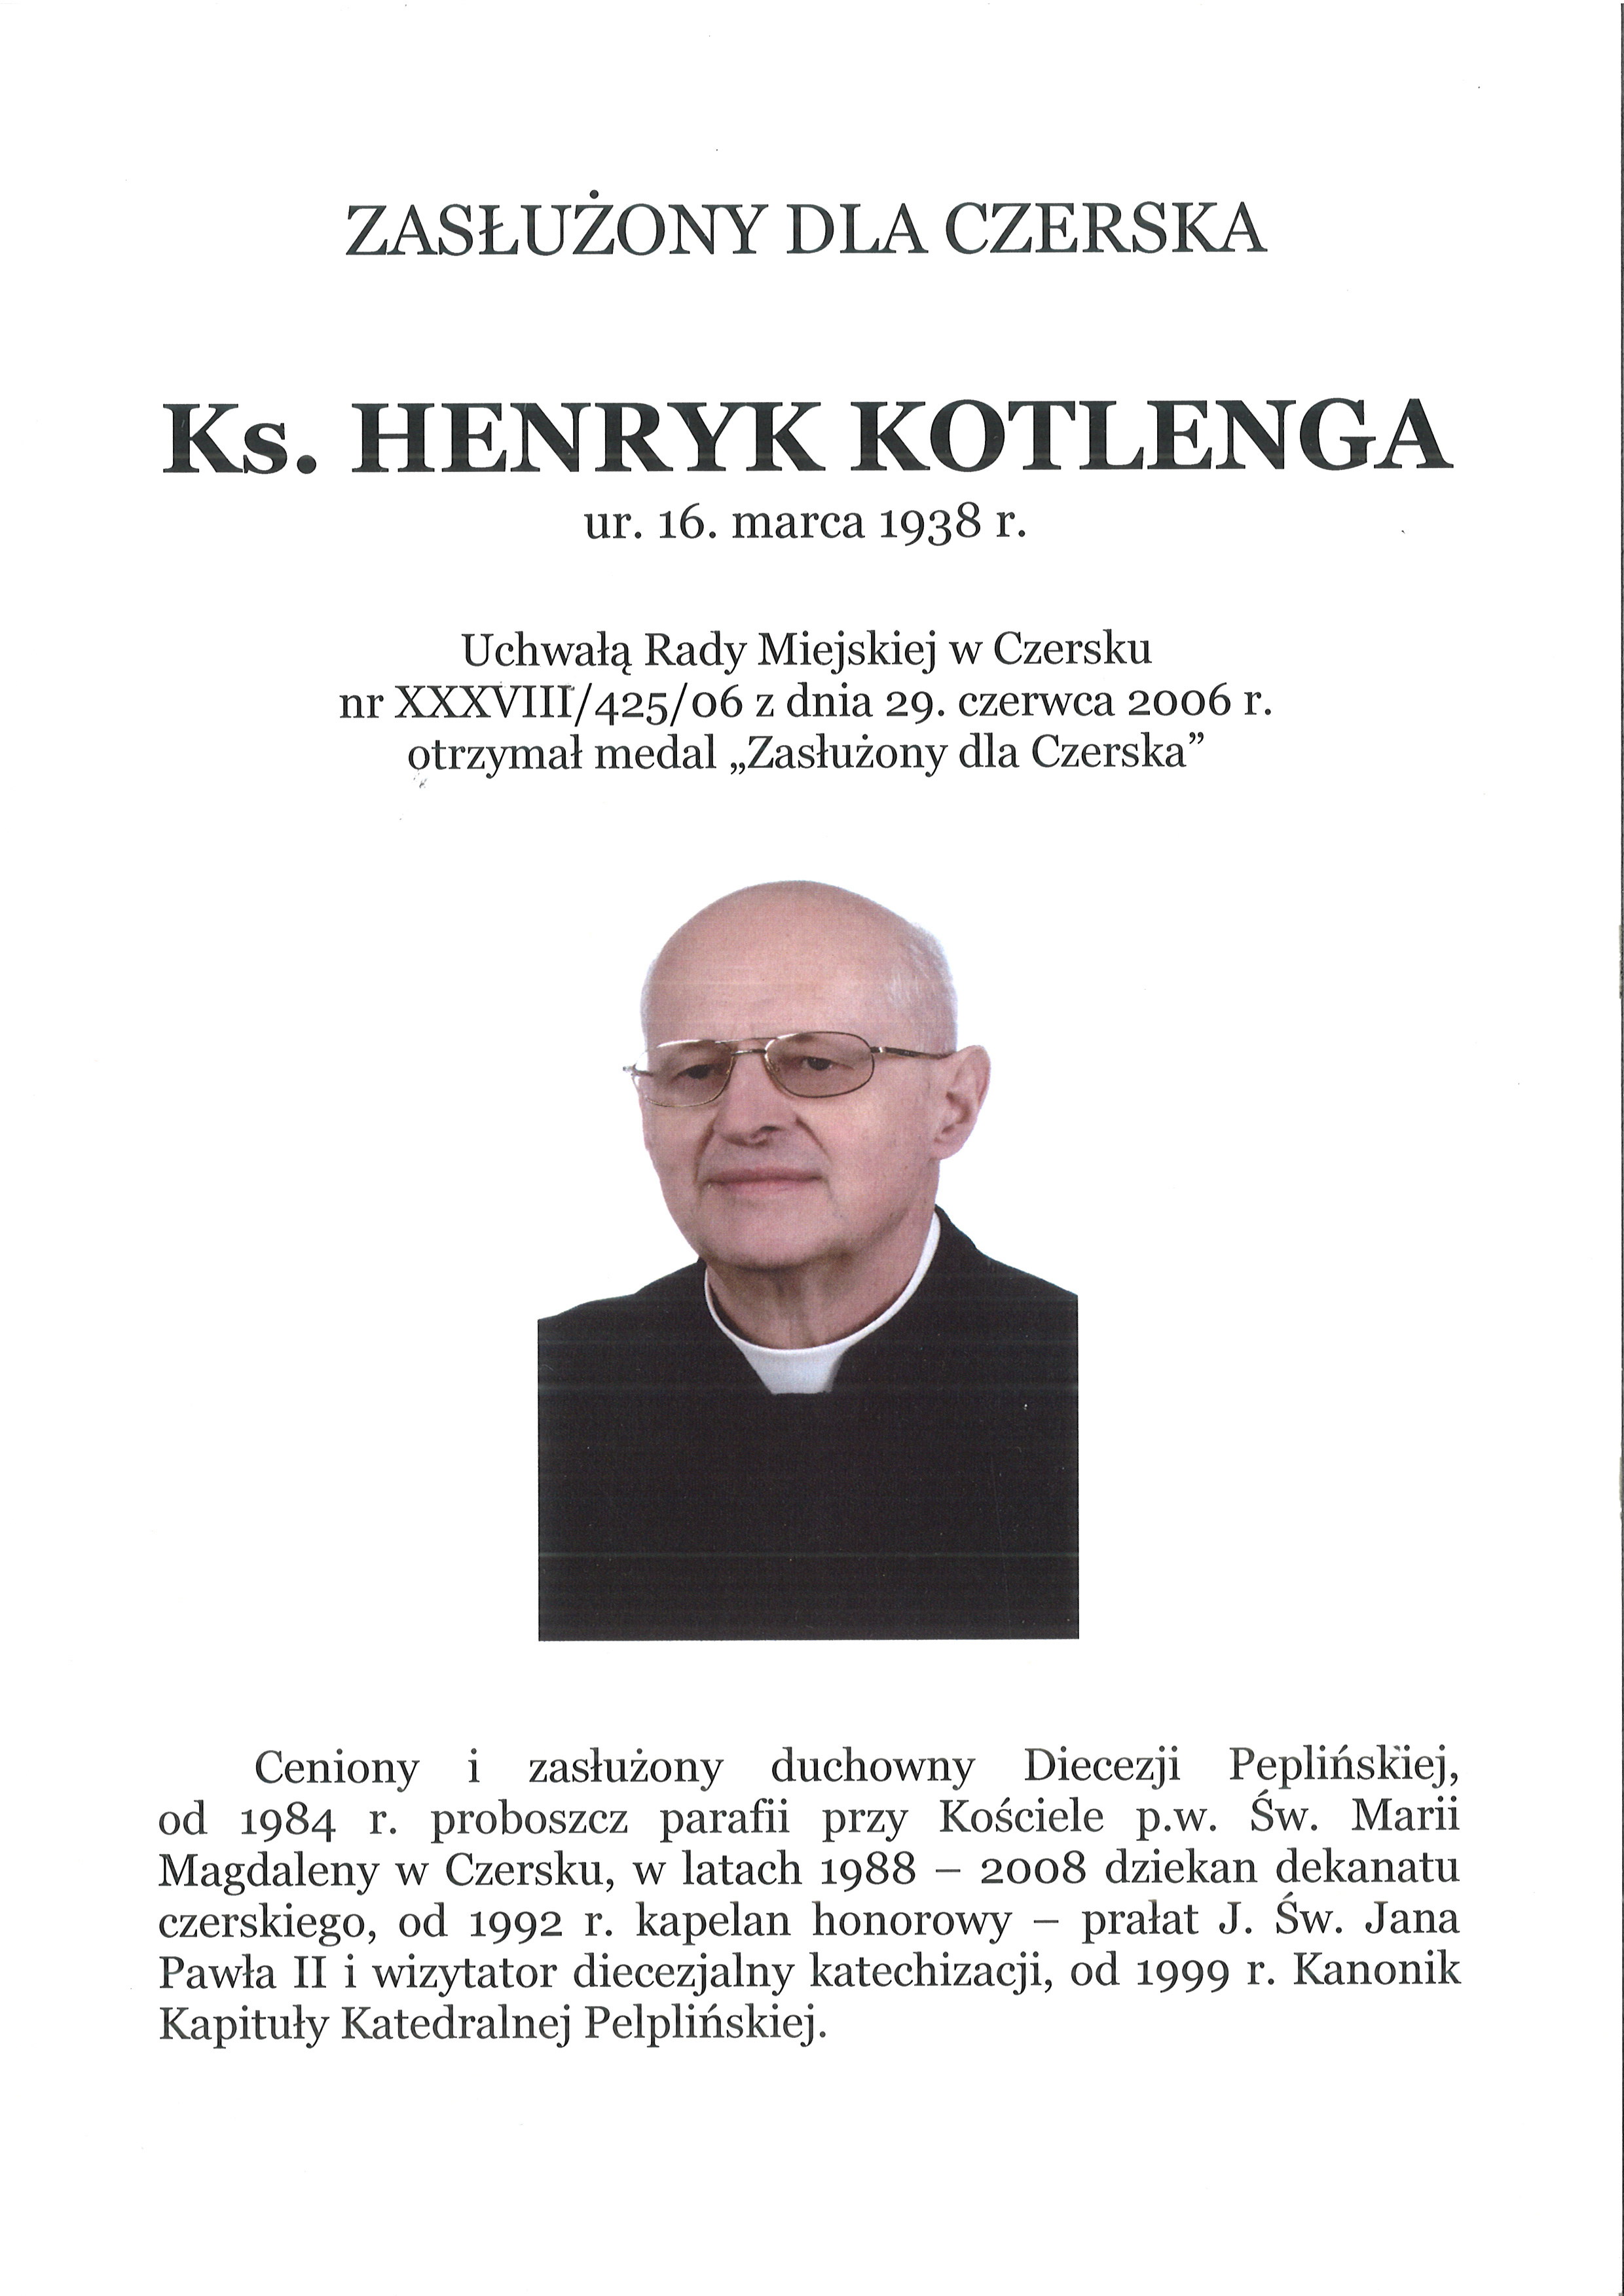 Henryk Kotlenga